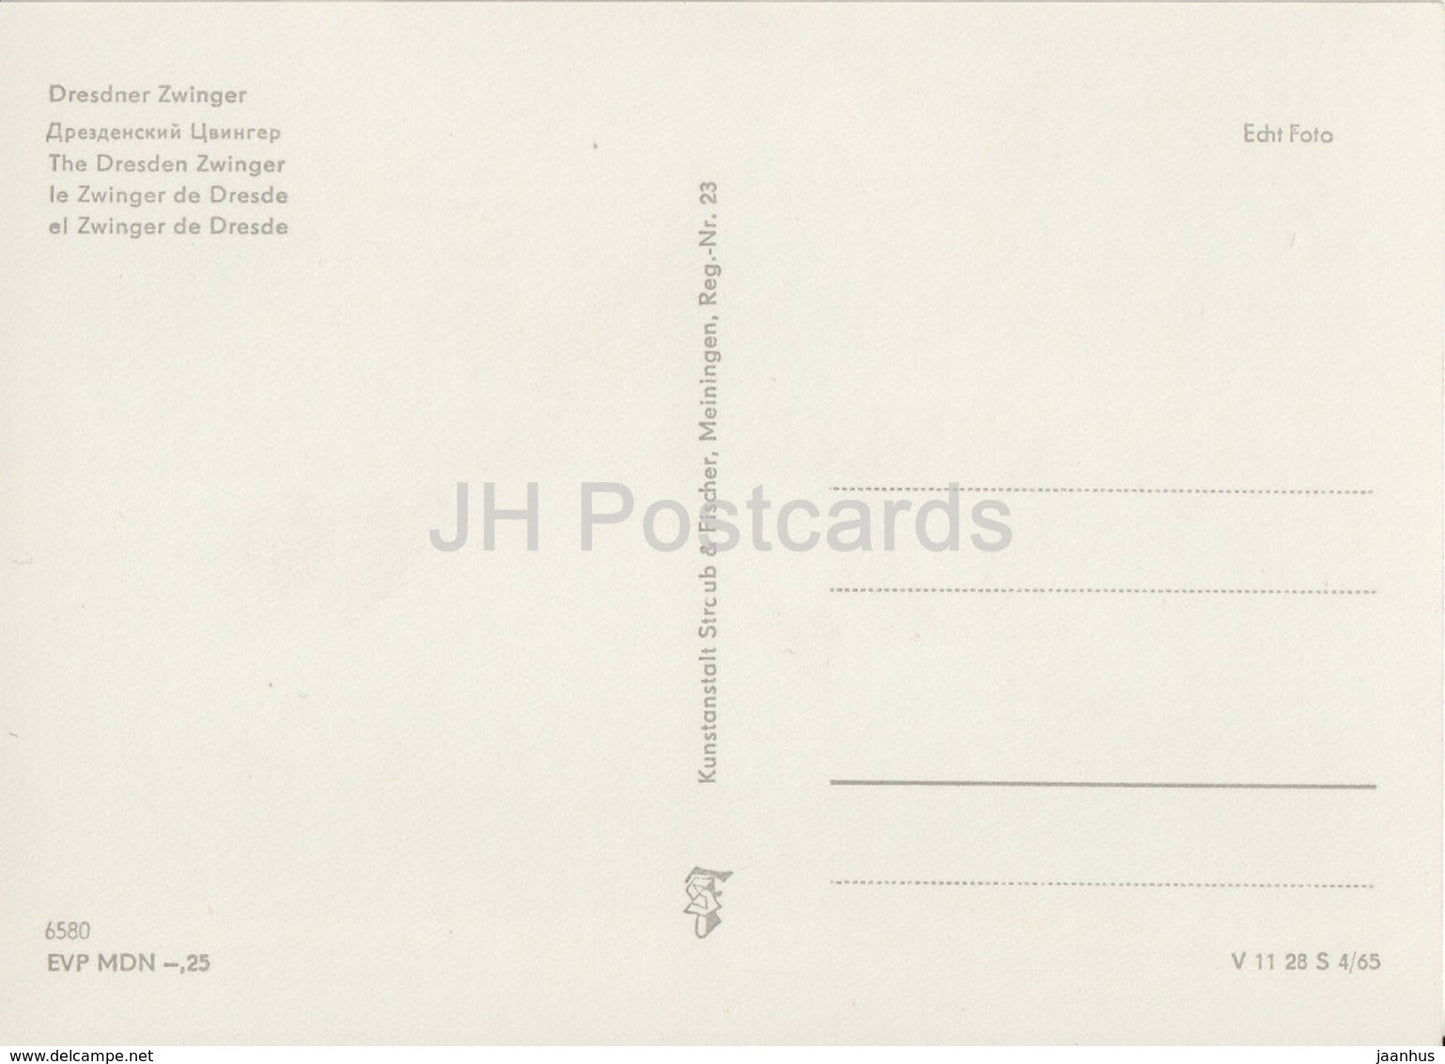 Dresden - Dresdner Zwinger - REISEBÜRO - 1964 - DDR - Germany - unused - JH Postcards